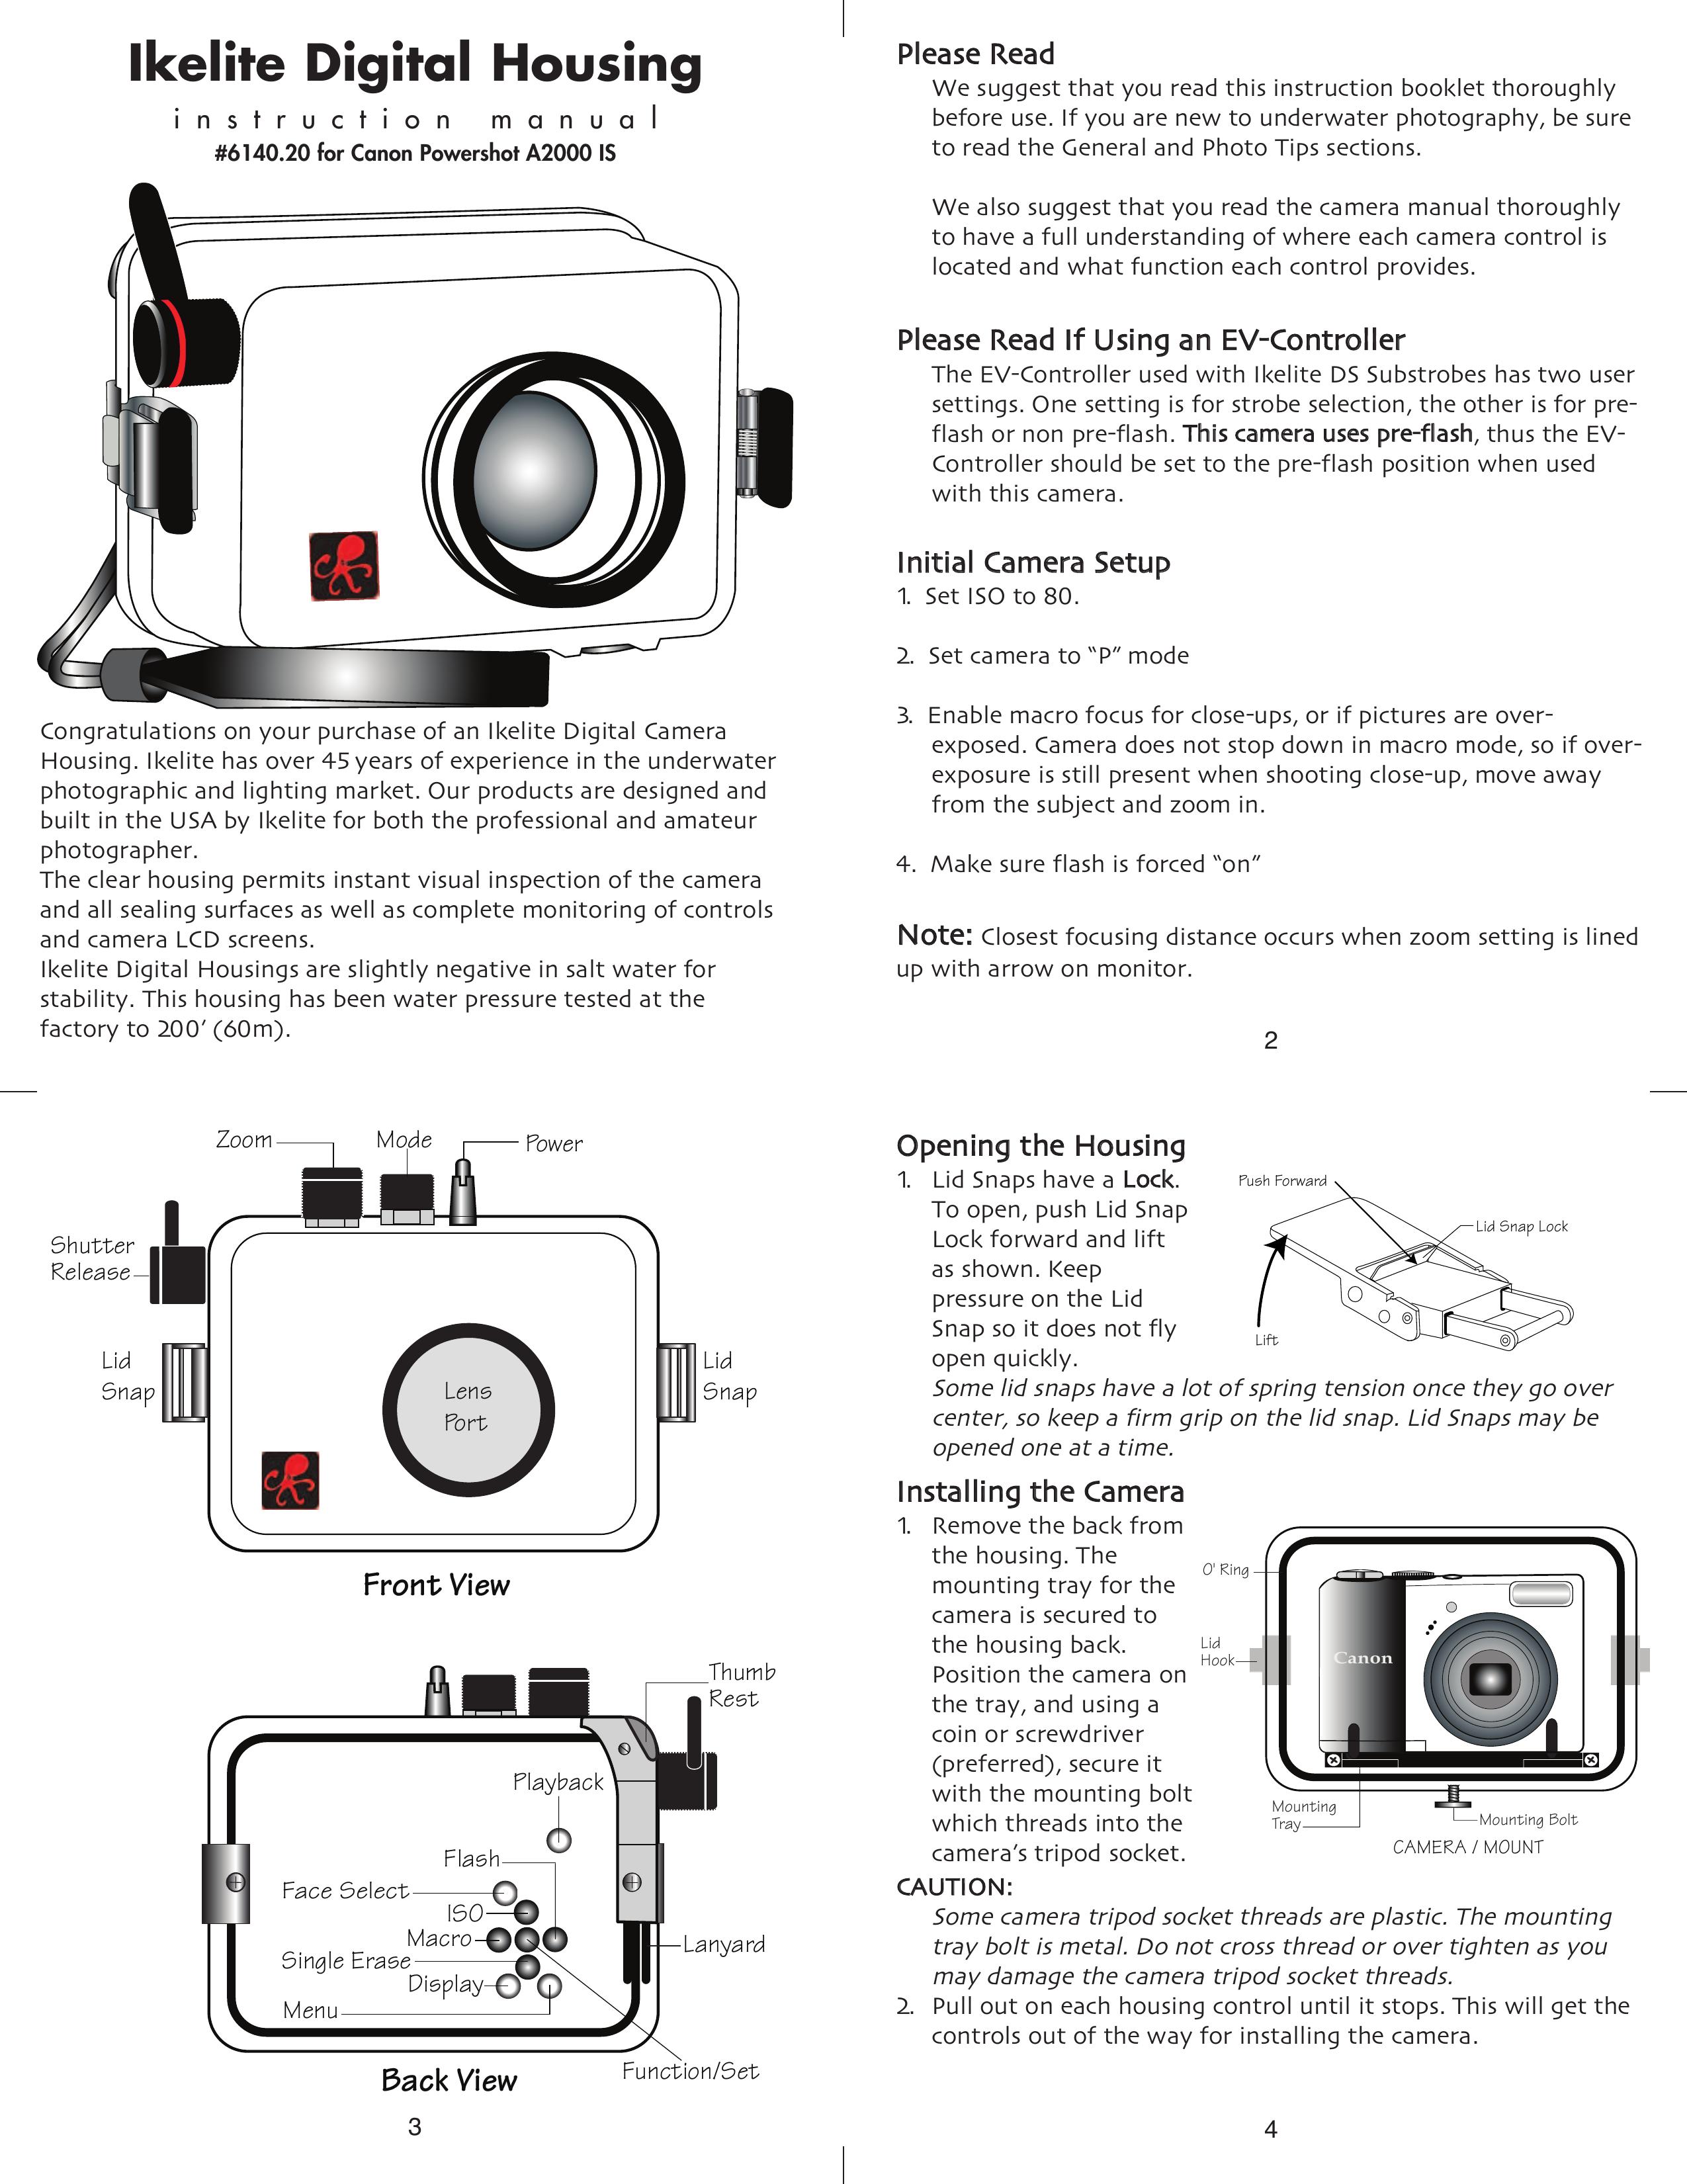 Ikelite A2000 IS Digital Camera User Manual